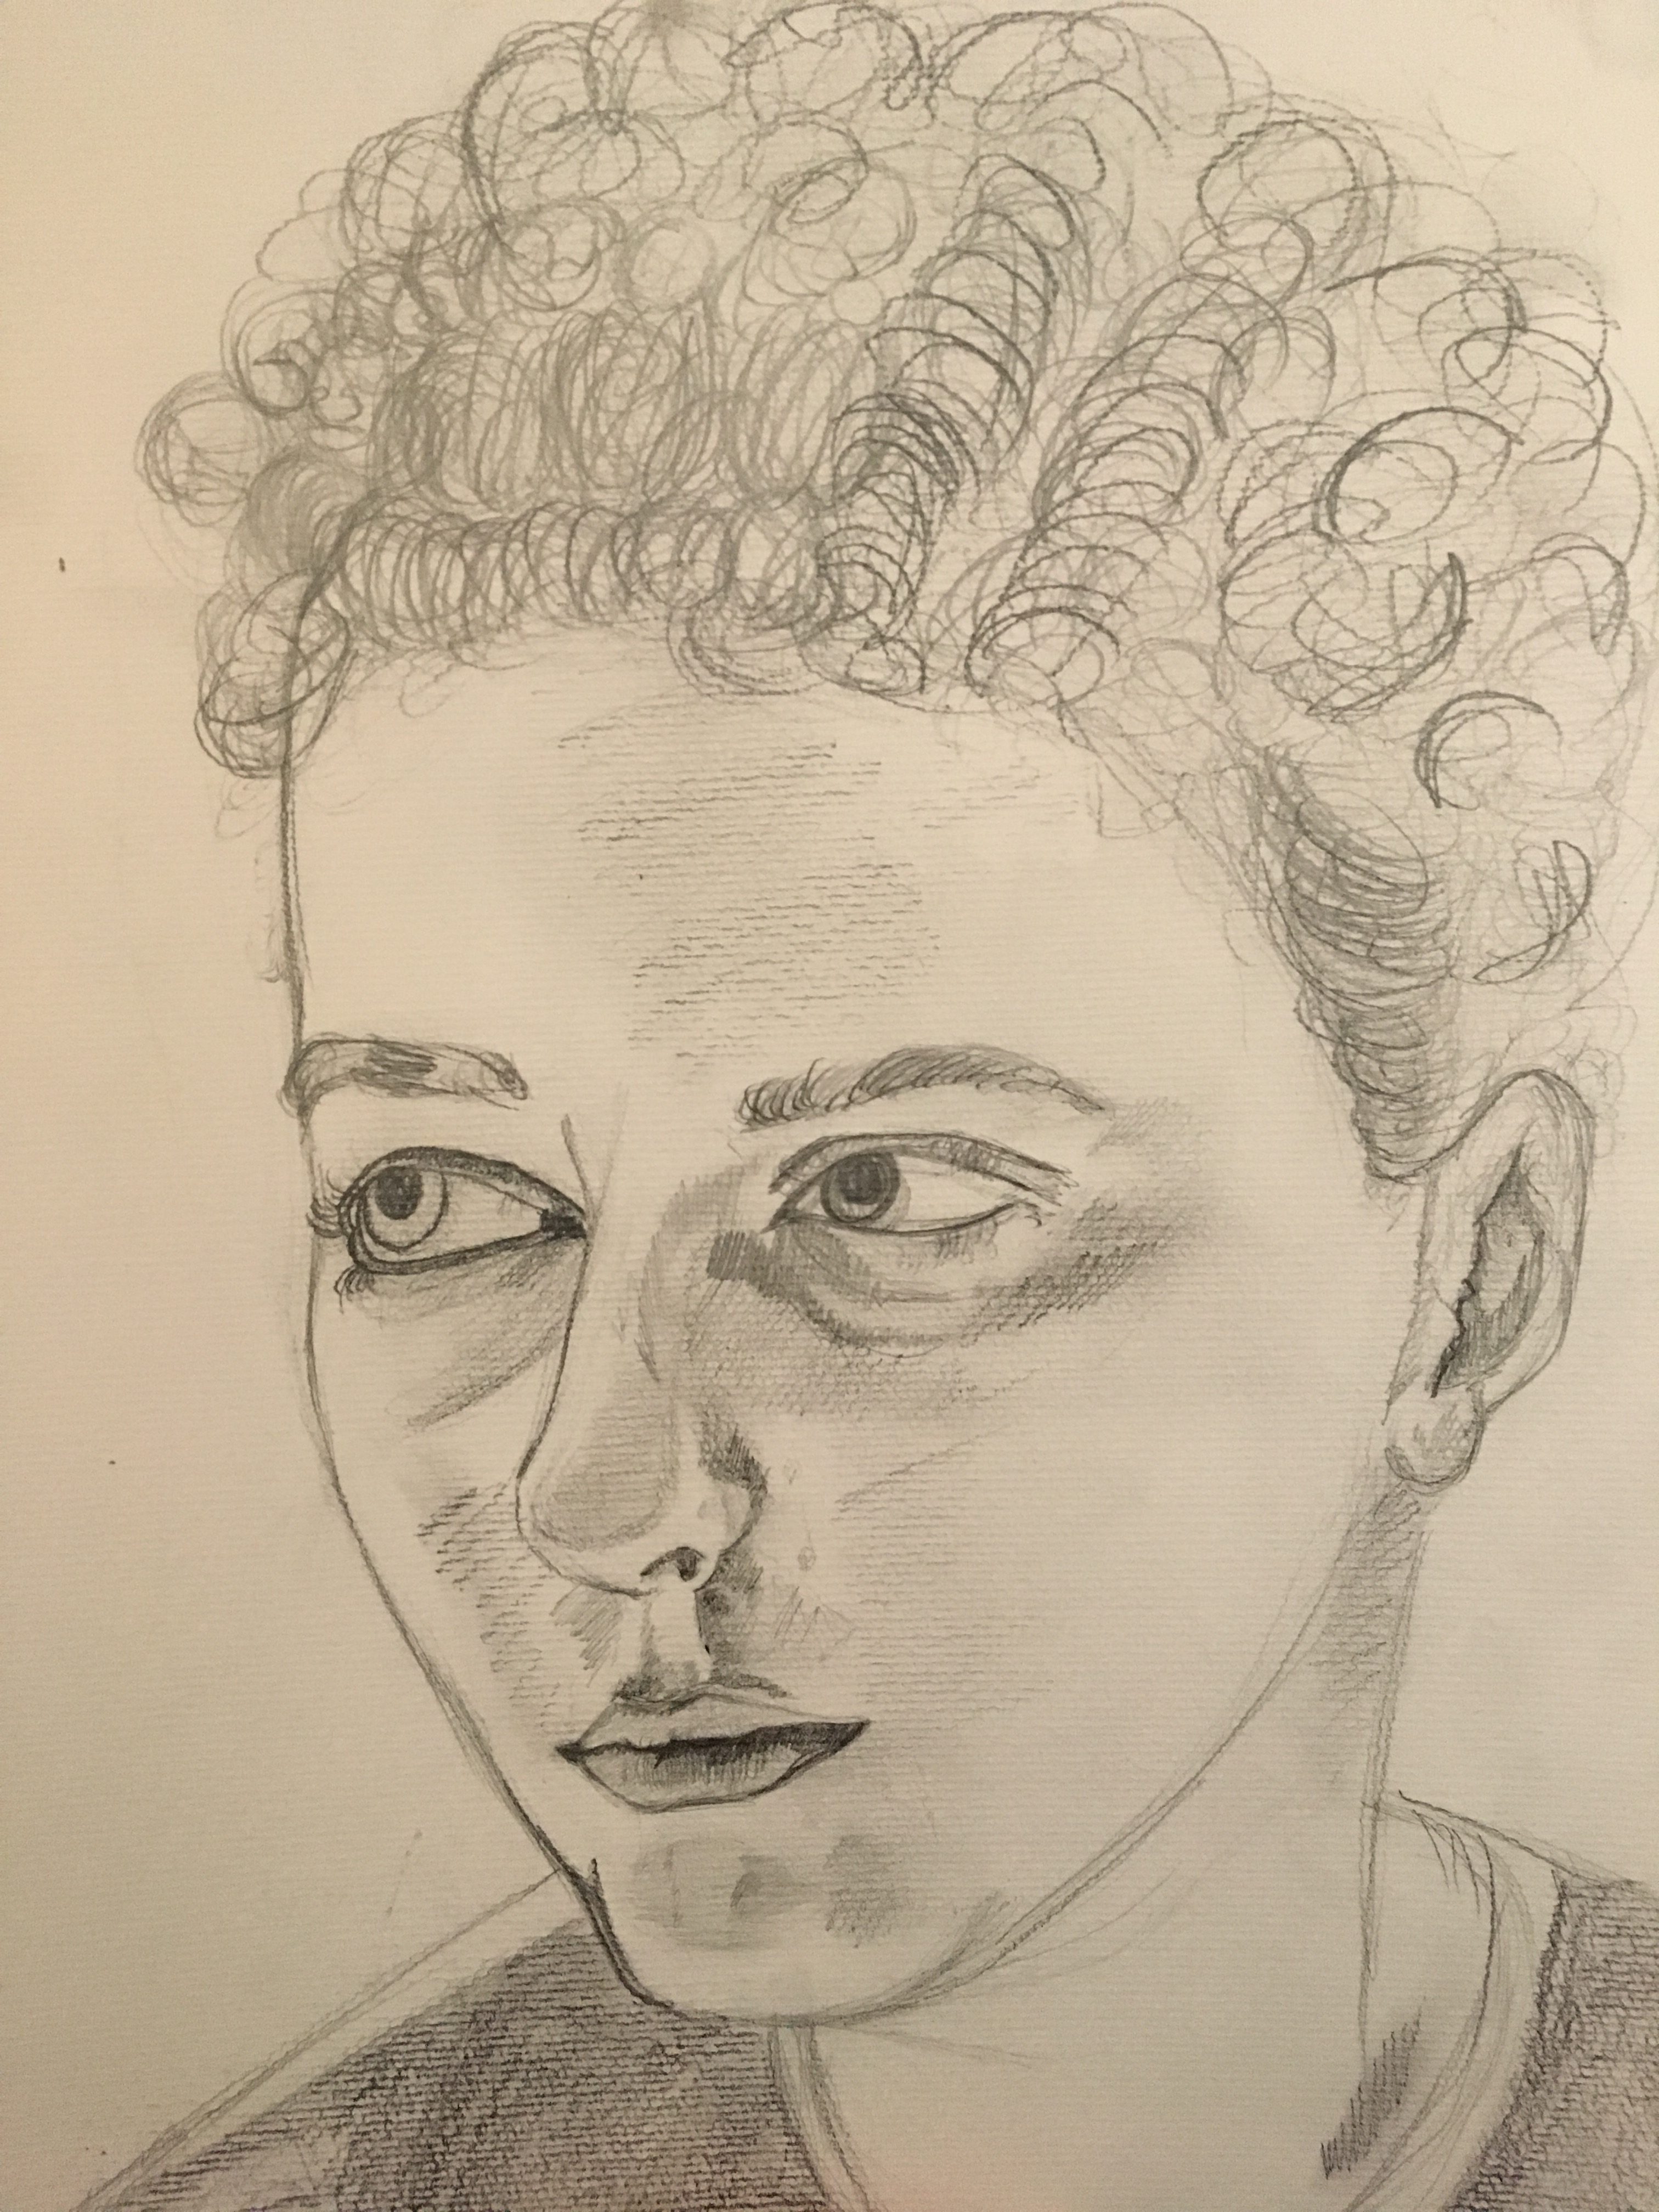 Week 3- Draw a portrait of a friend